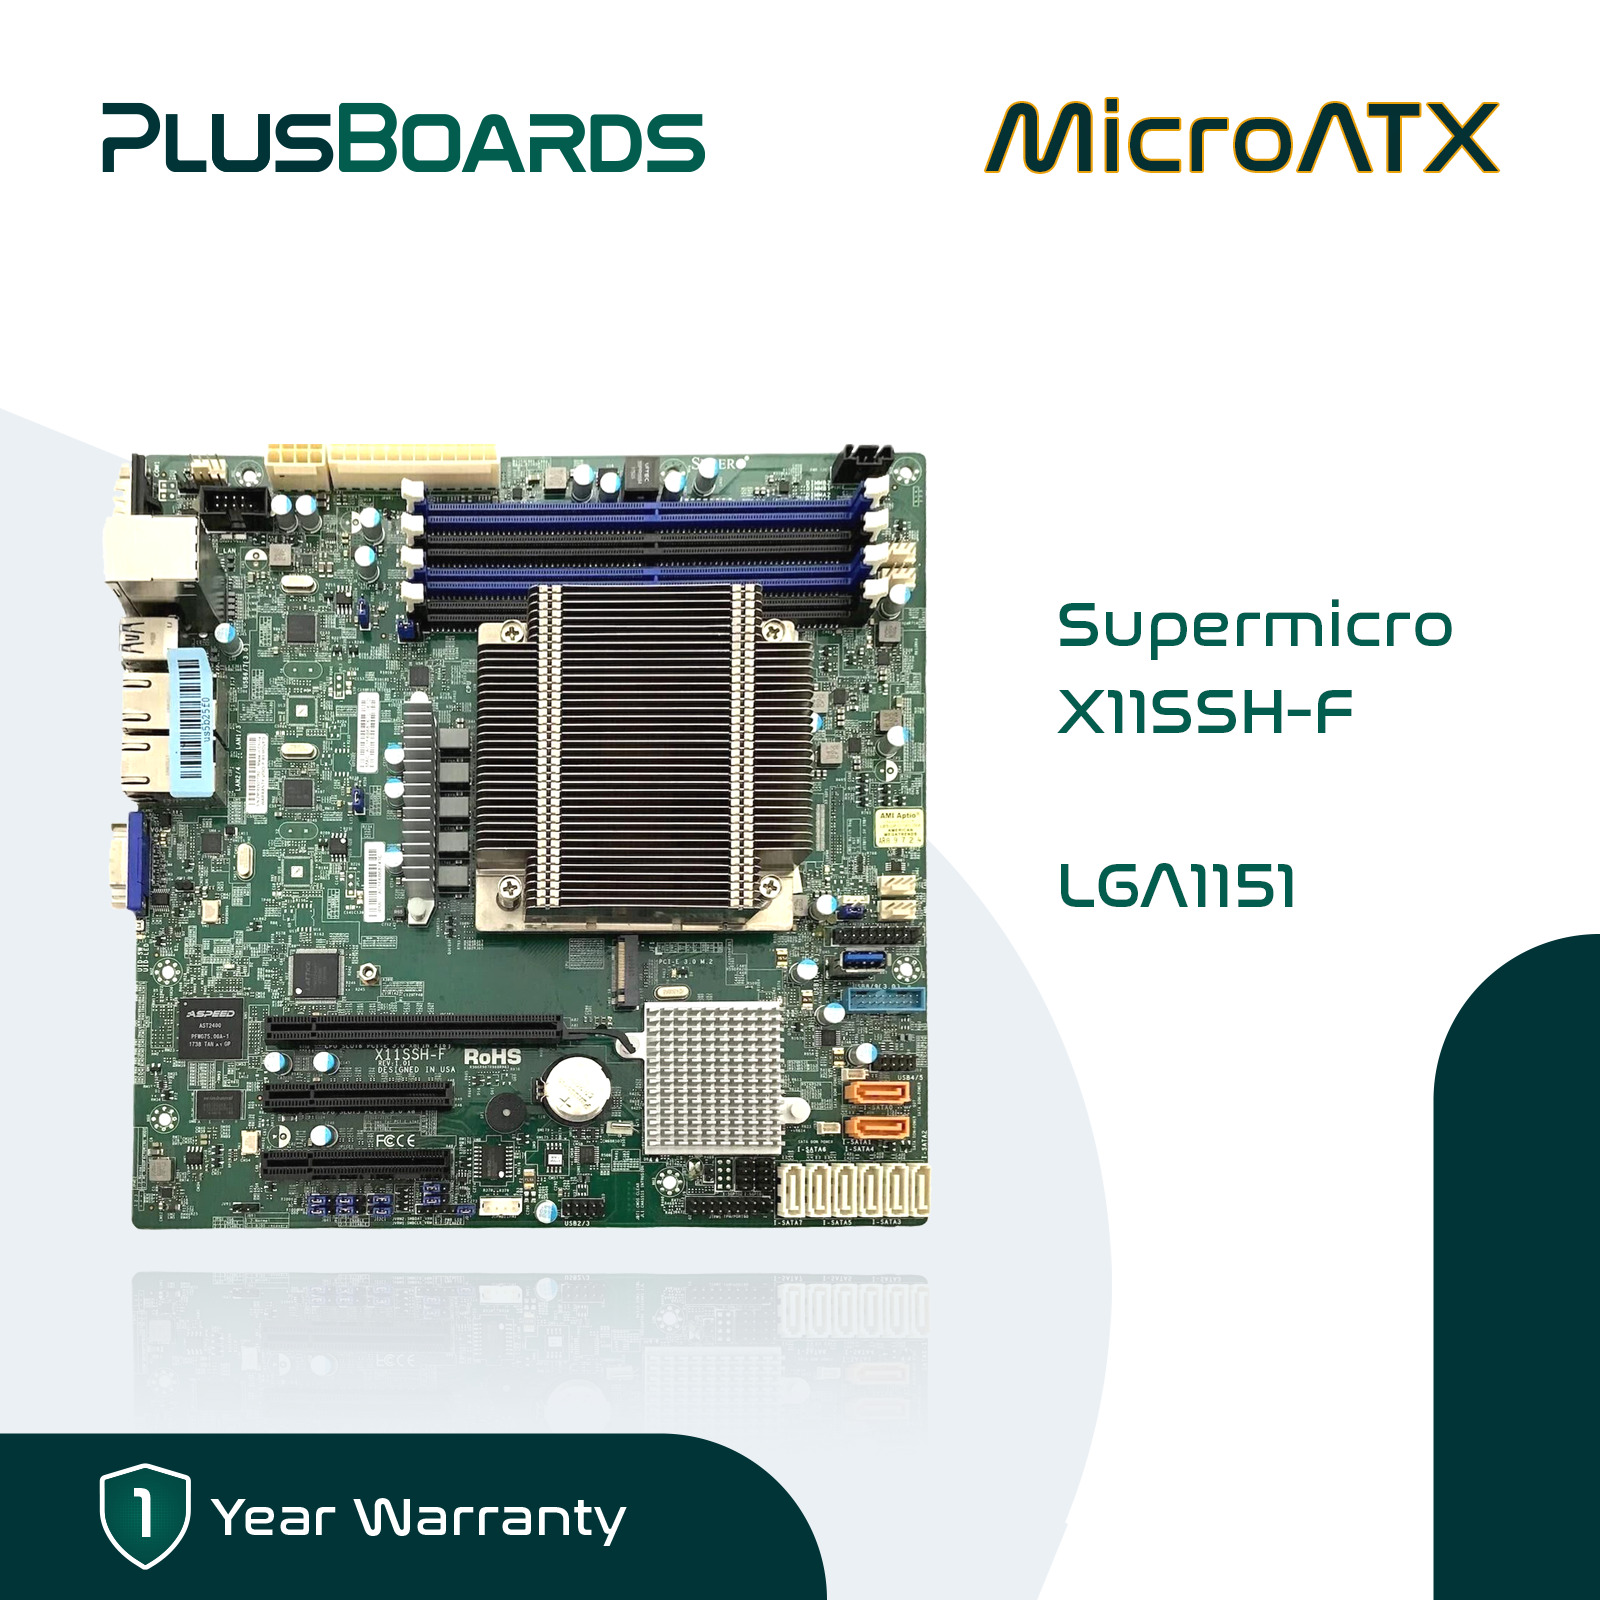 Supermicro X11SSH-F LGA 1151 Socket H4 C236 DDR4 MicroATX Motherboard Tested